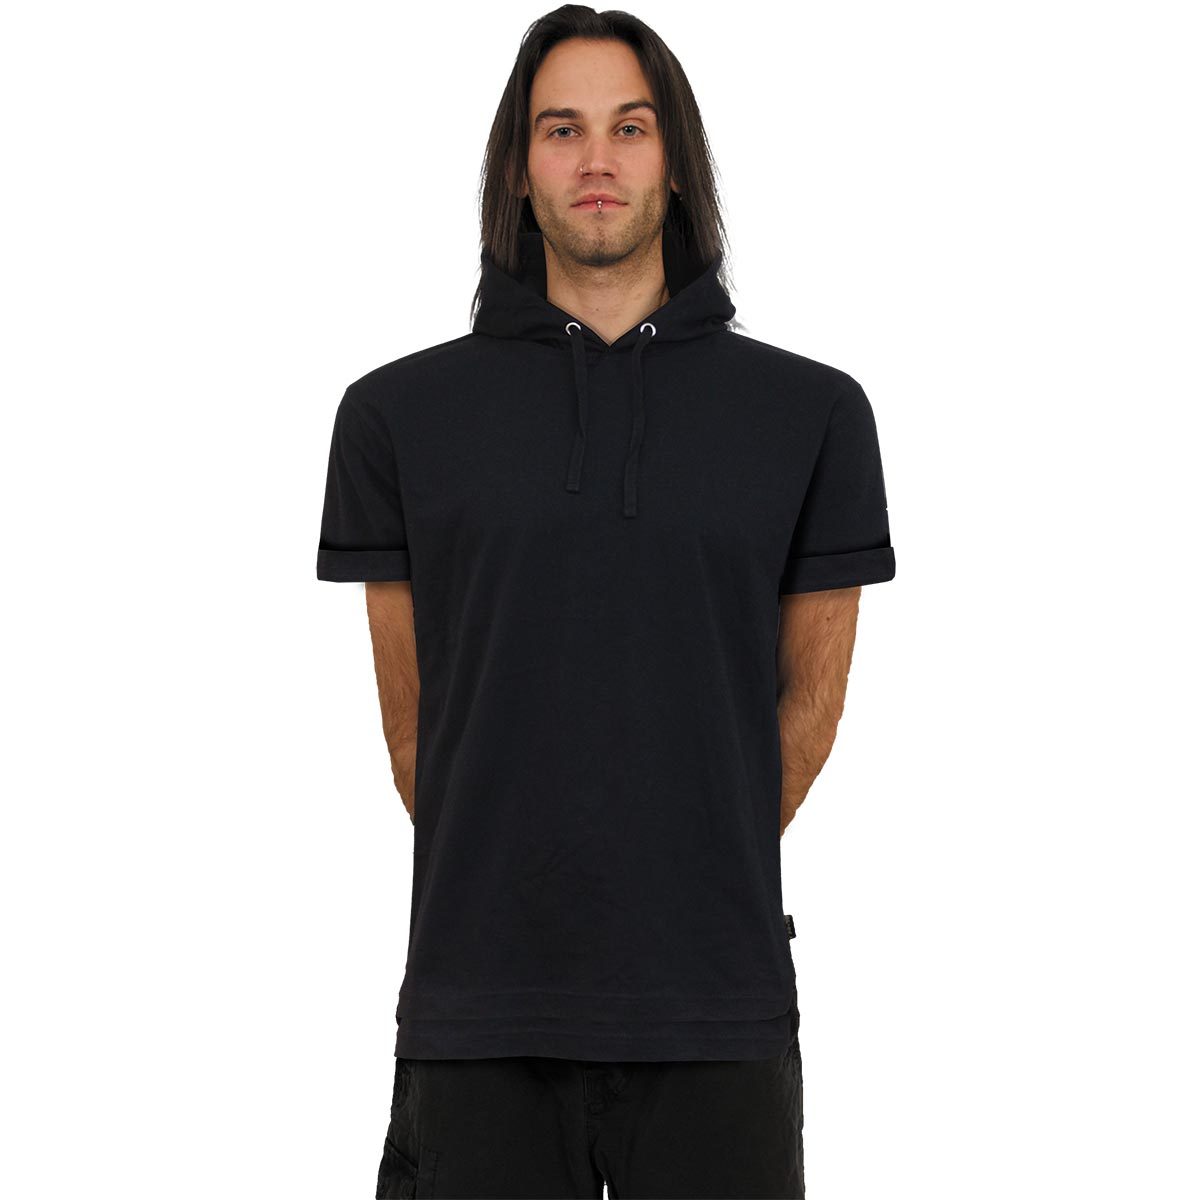 URBAN FASHION - Fine Cotton T-shirt Hoody Black - Spiral USA